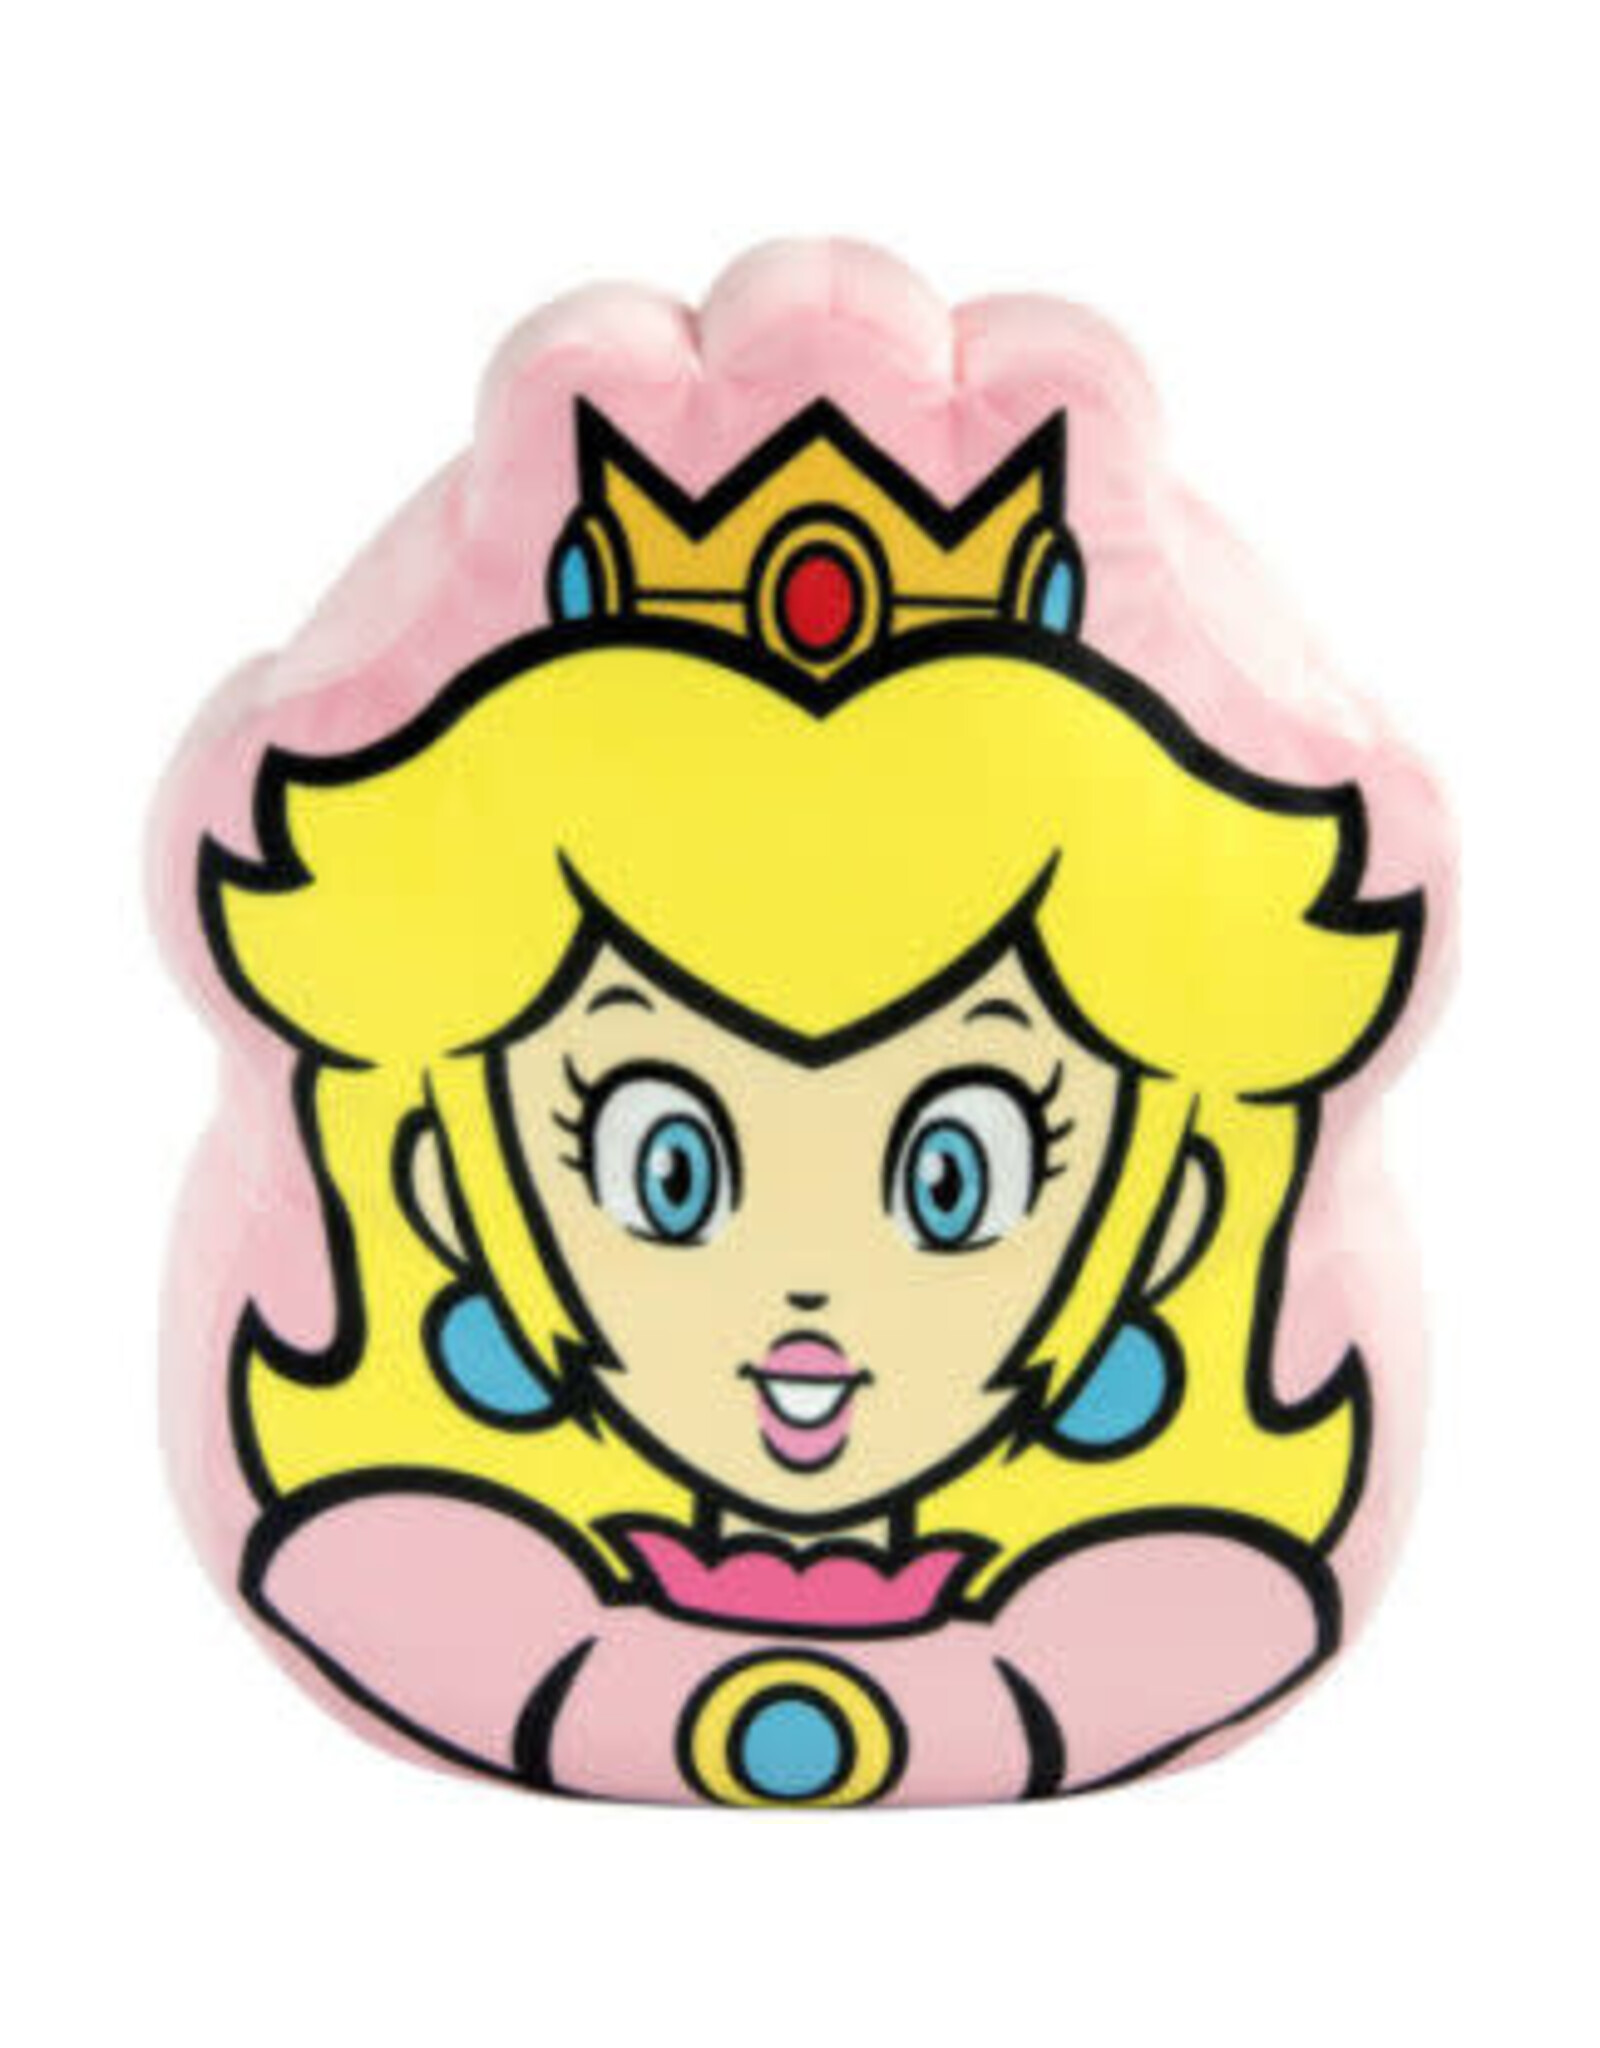 Takara Tomy Tomy: Club Mocchi-Mocchi - Super Mario - Princess Peach 15" Plush